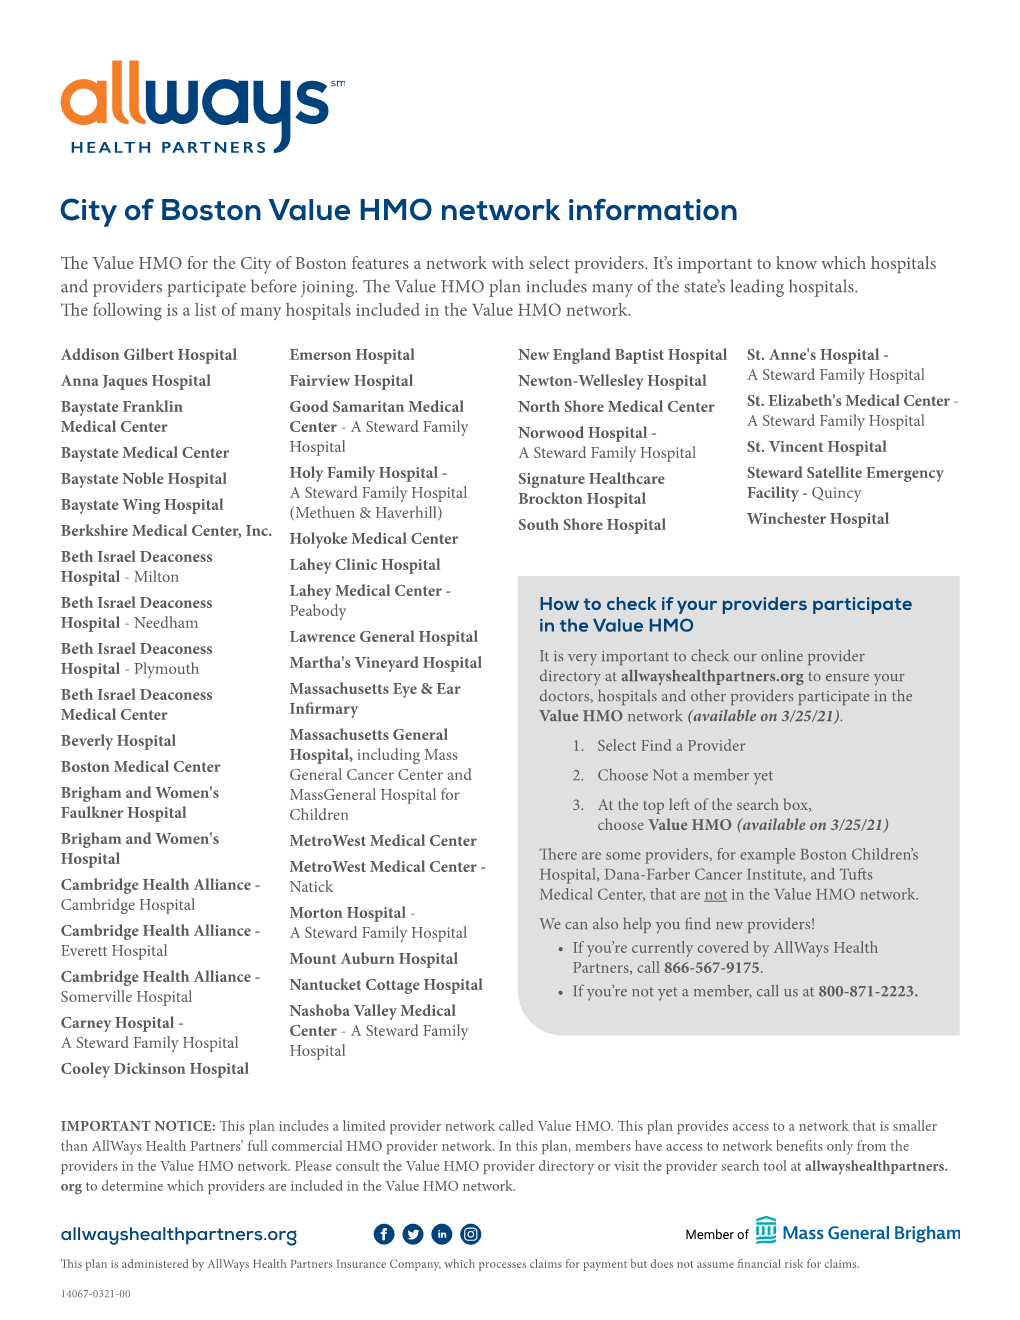 City of Boston Value HMO Network Information